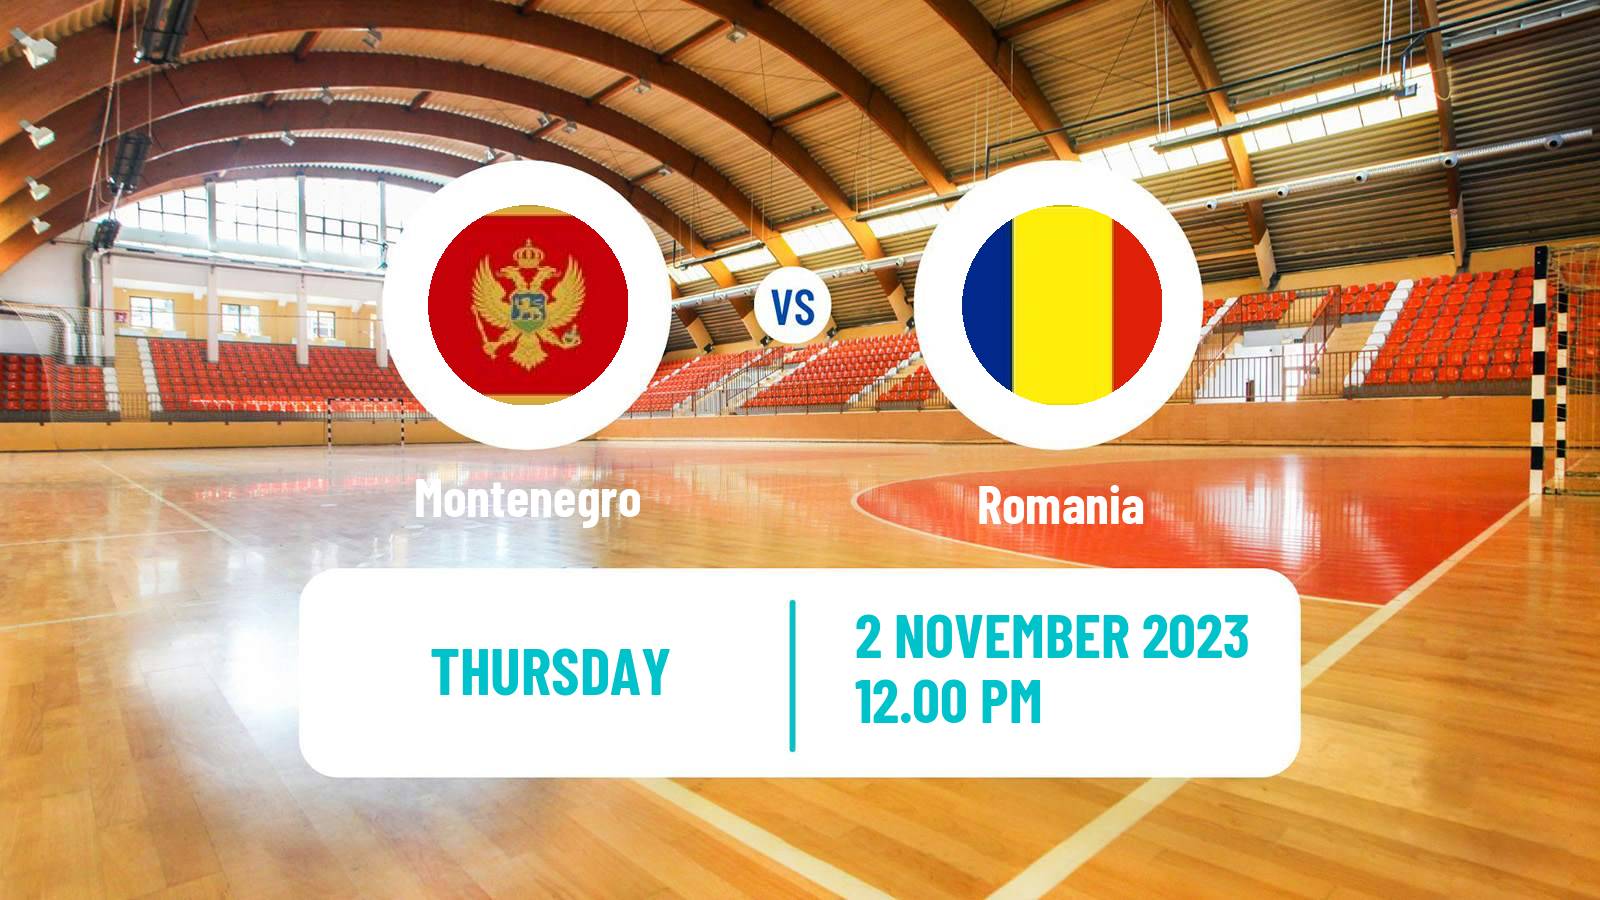 Handball Friendly International Handball Montenegro - Romania